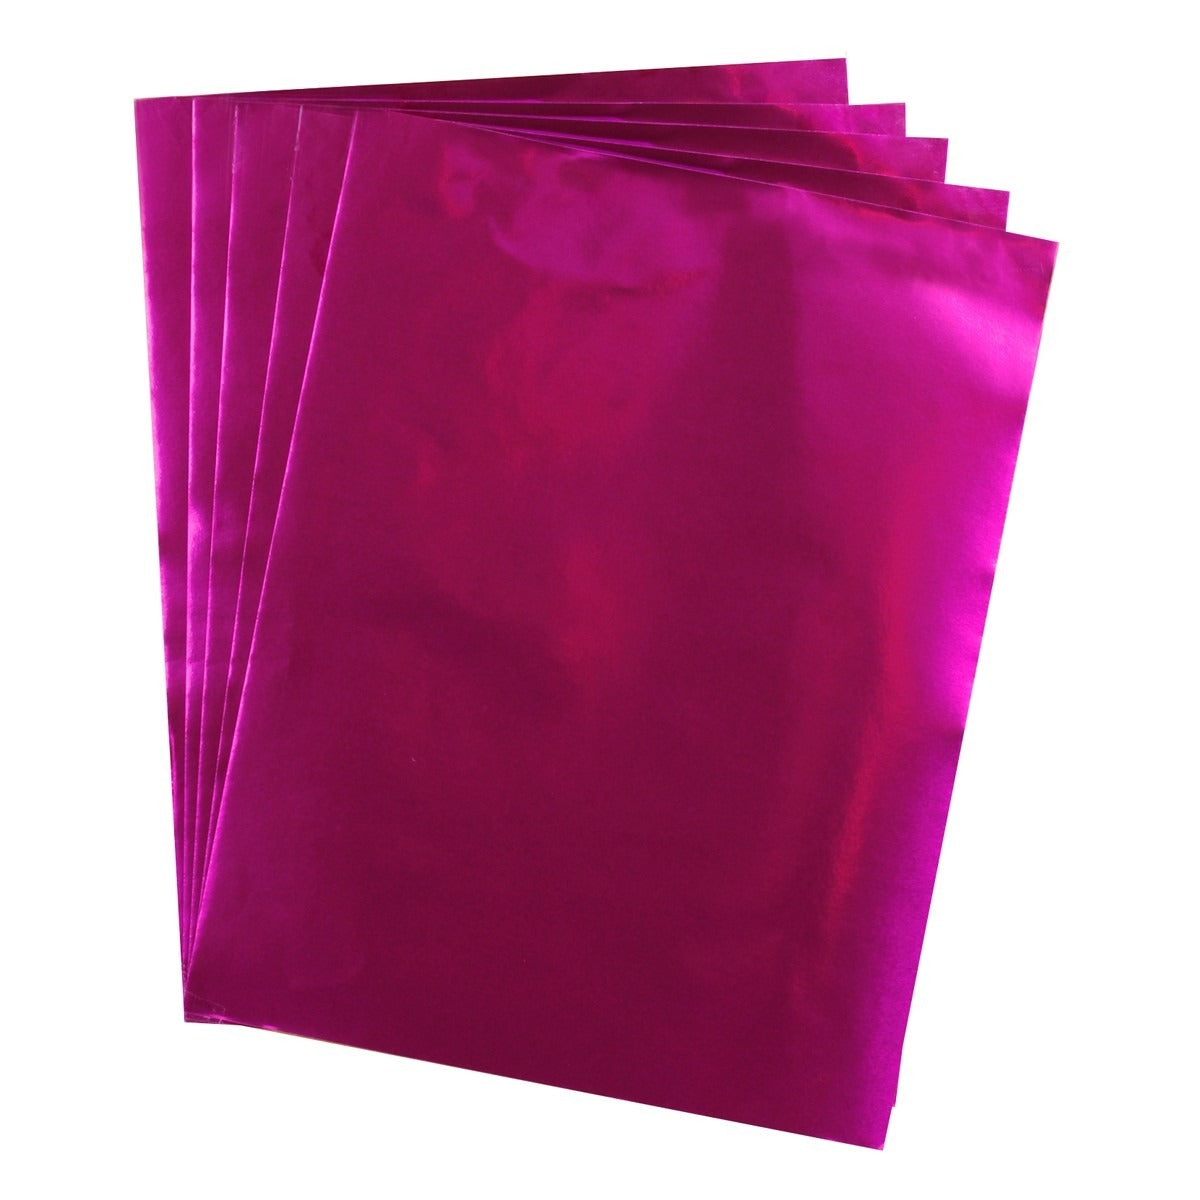 Metallic Foil Paper 12 Sheets 8.5" x 11" Fuchsia